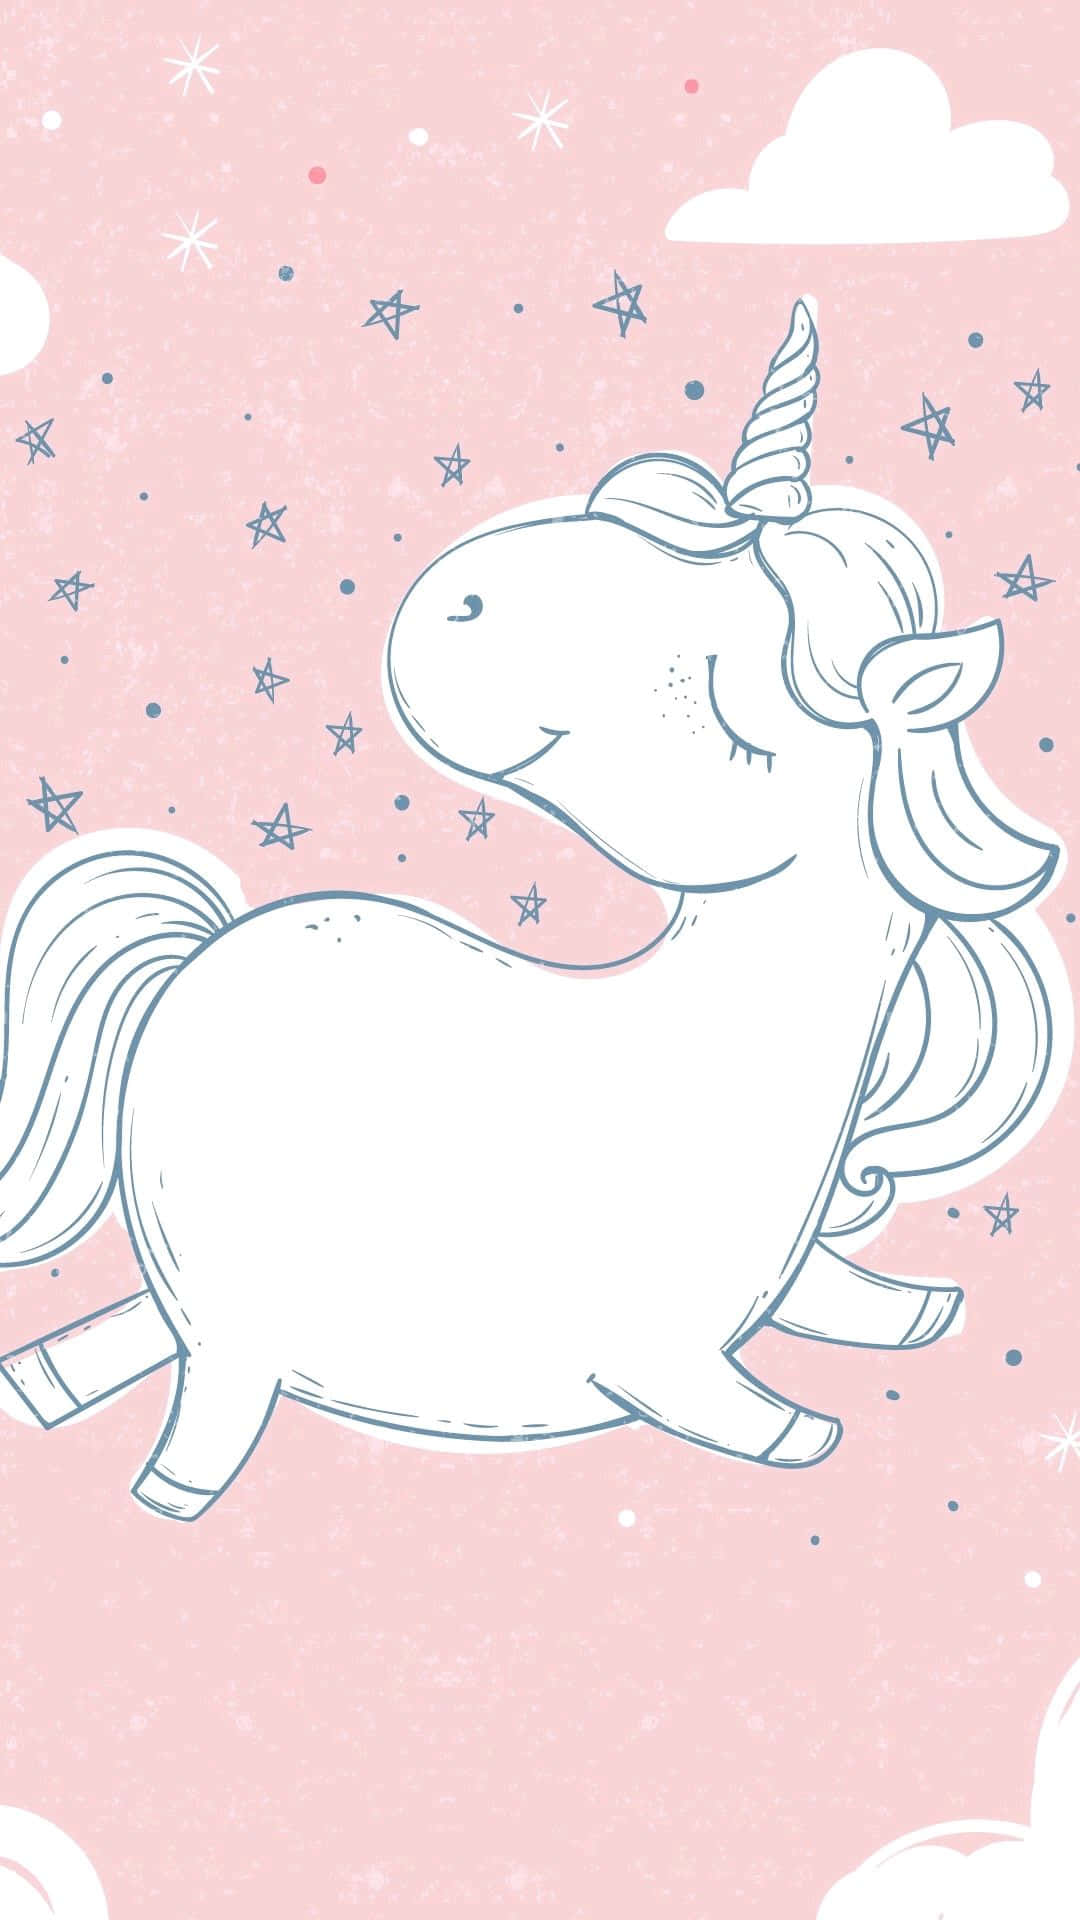 Cute Unicorn Pastel Pink Aesthetic Illustration Art Picture